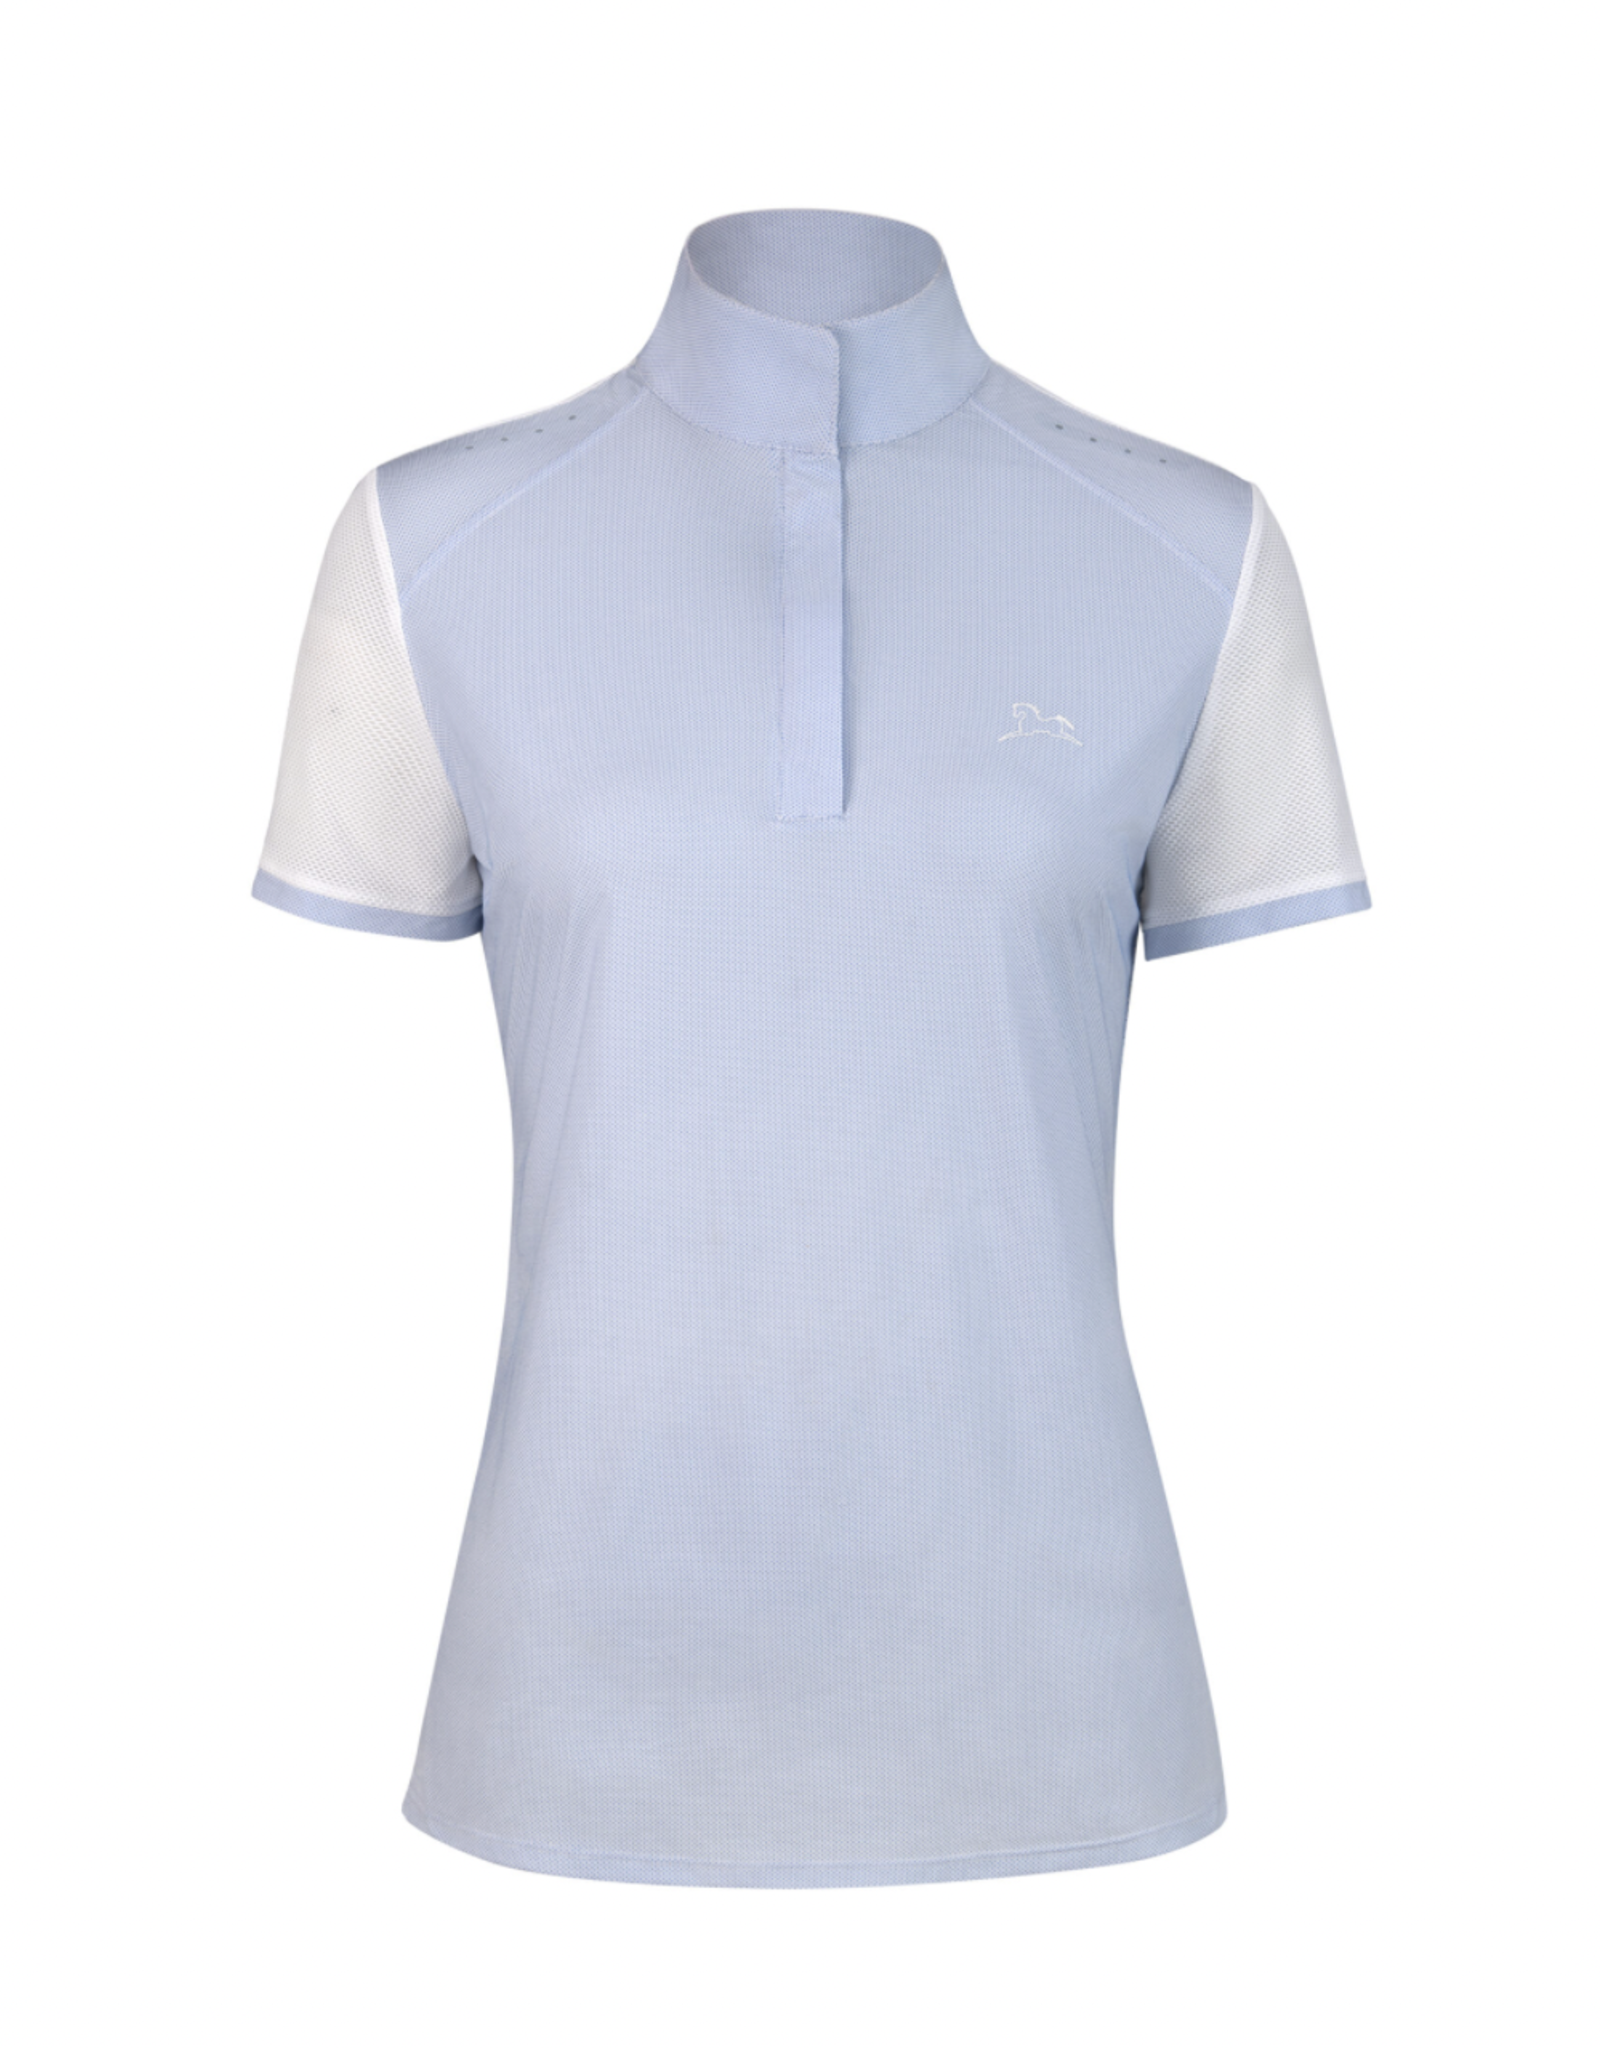 R.J. Classic Ladies' Aerial Short Sleeve Show Shirt